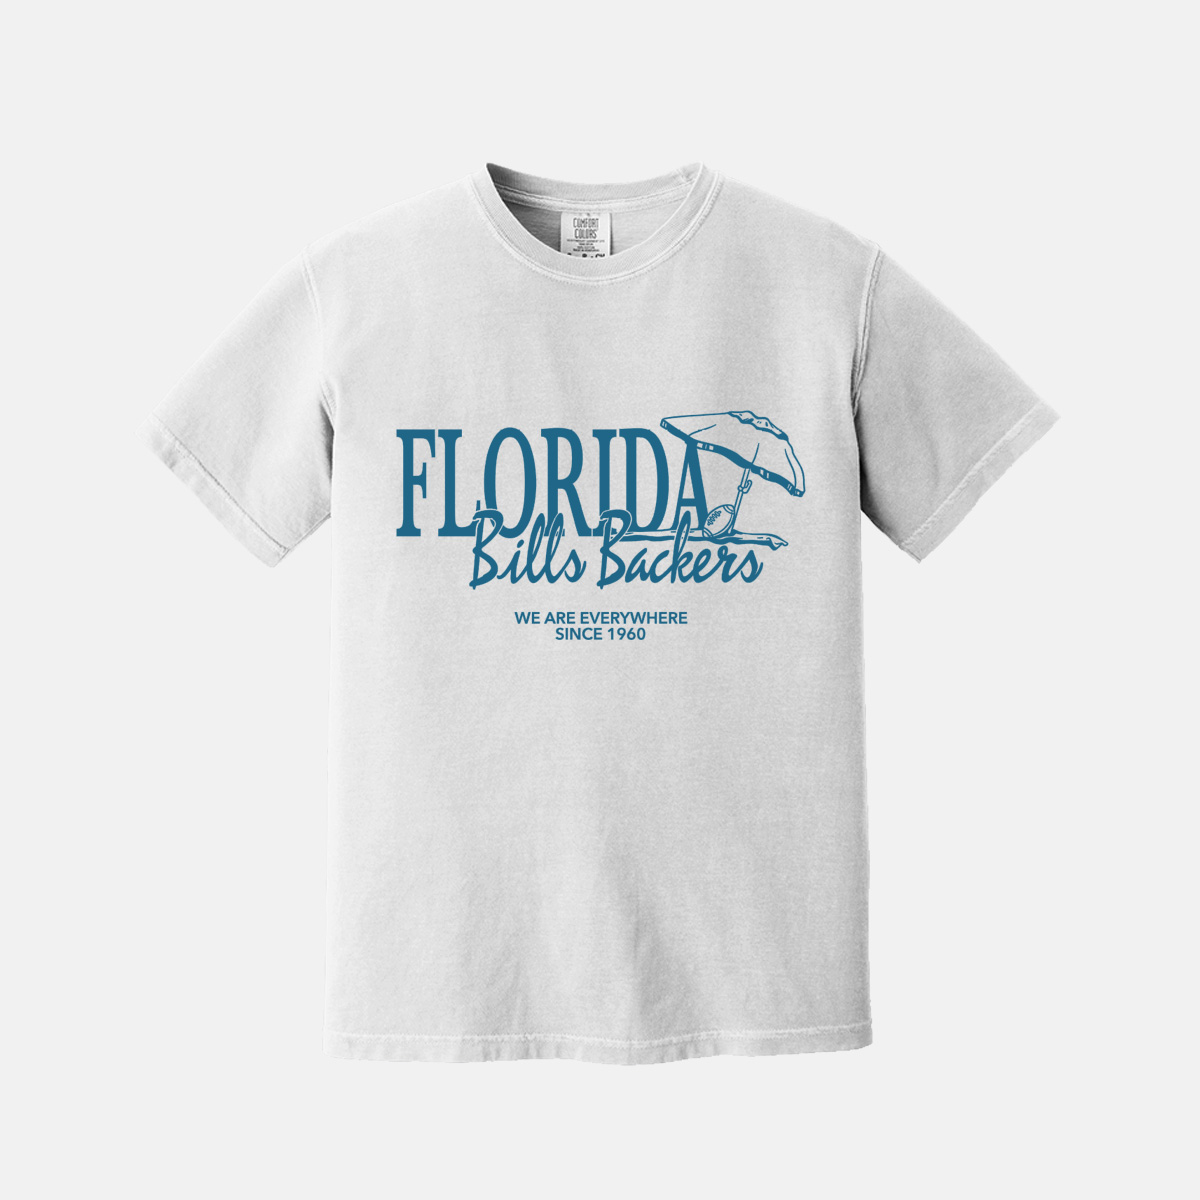 Vintage Bills Backers Florida - Buff-a-logo